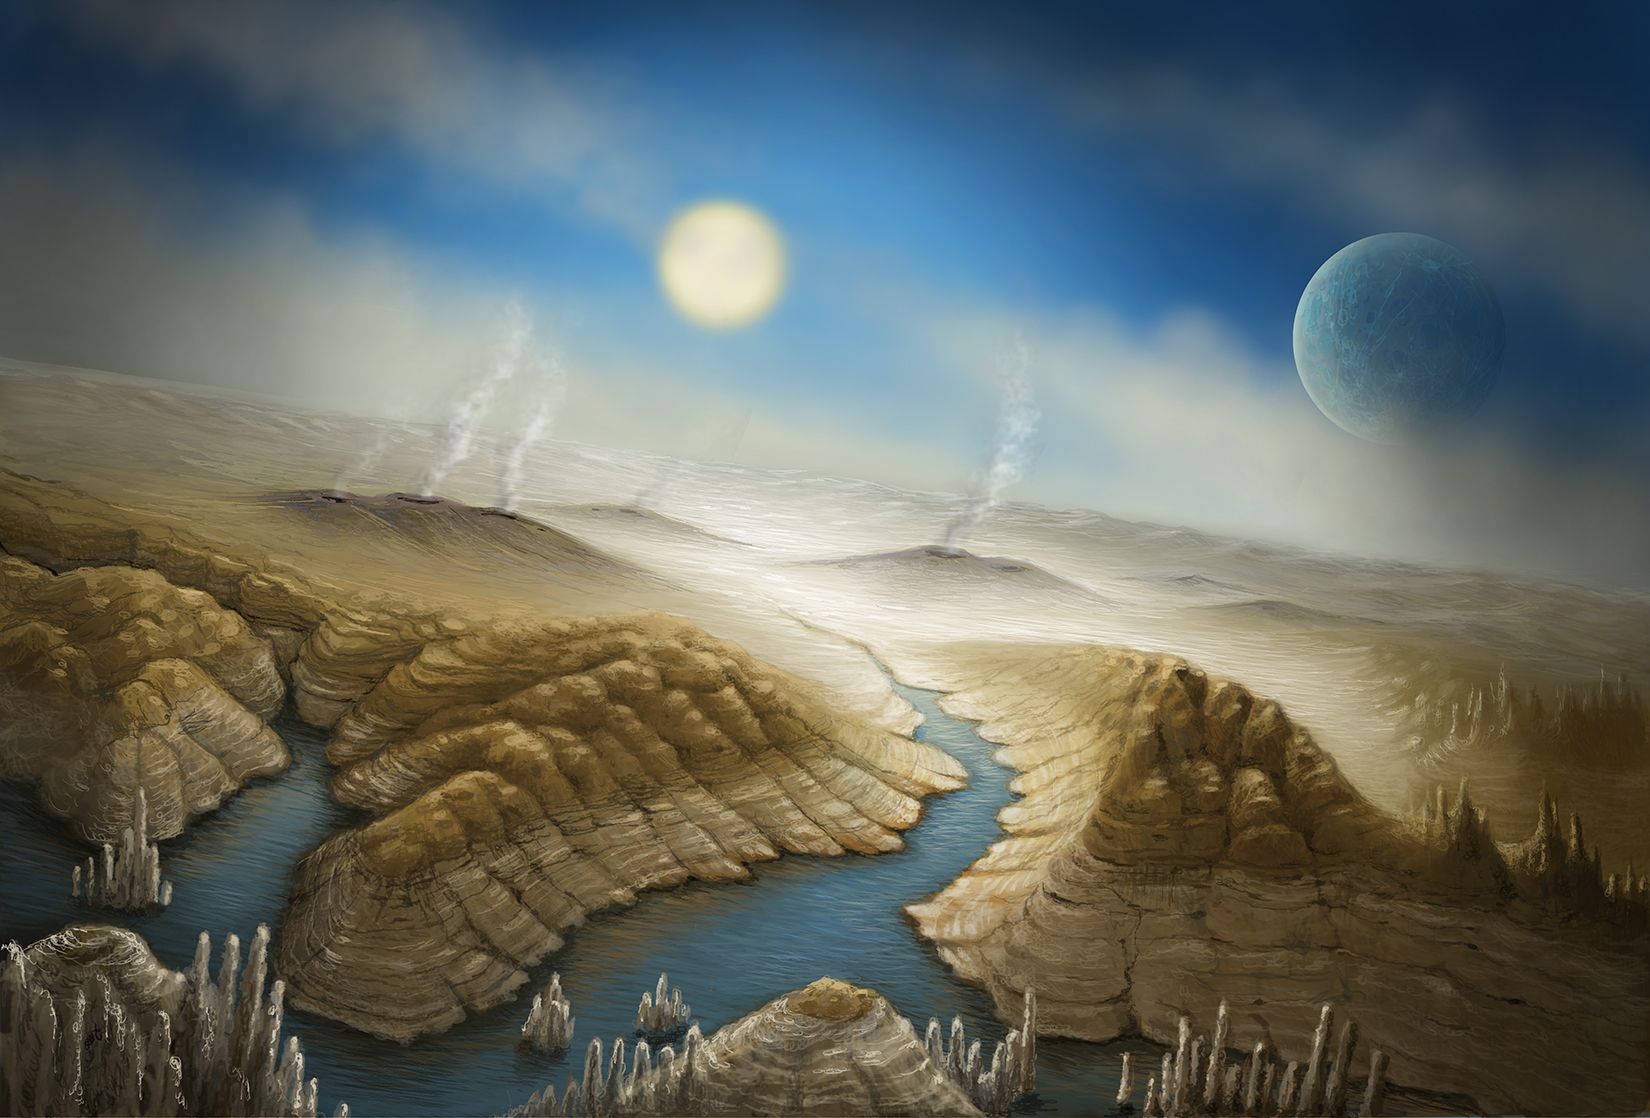 kepler-452b-exoplanet-illustration.jpg